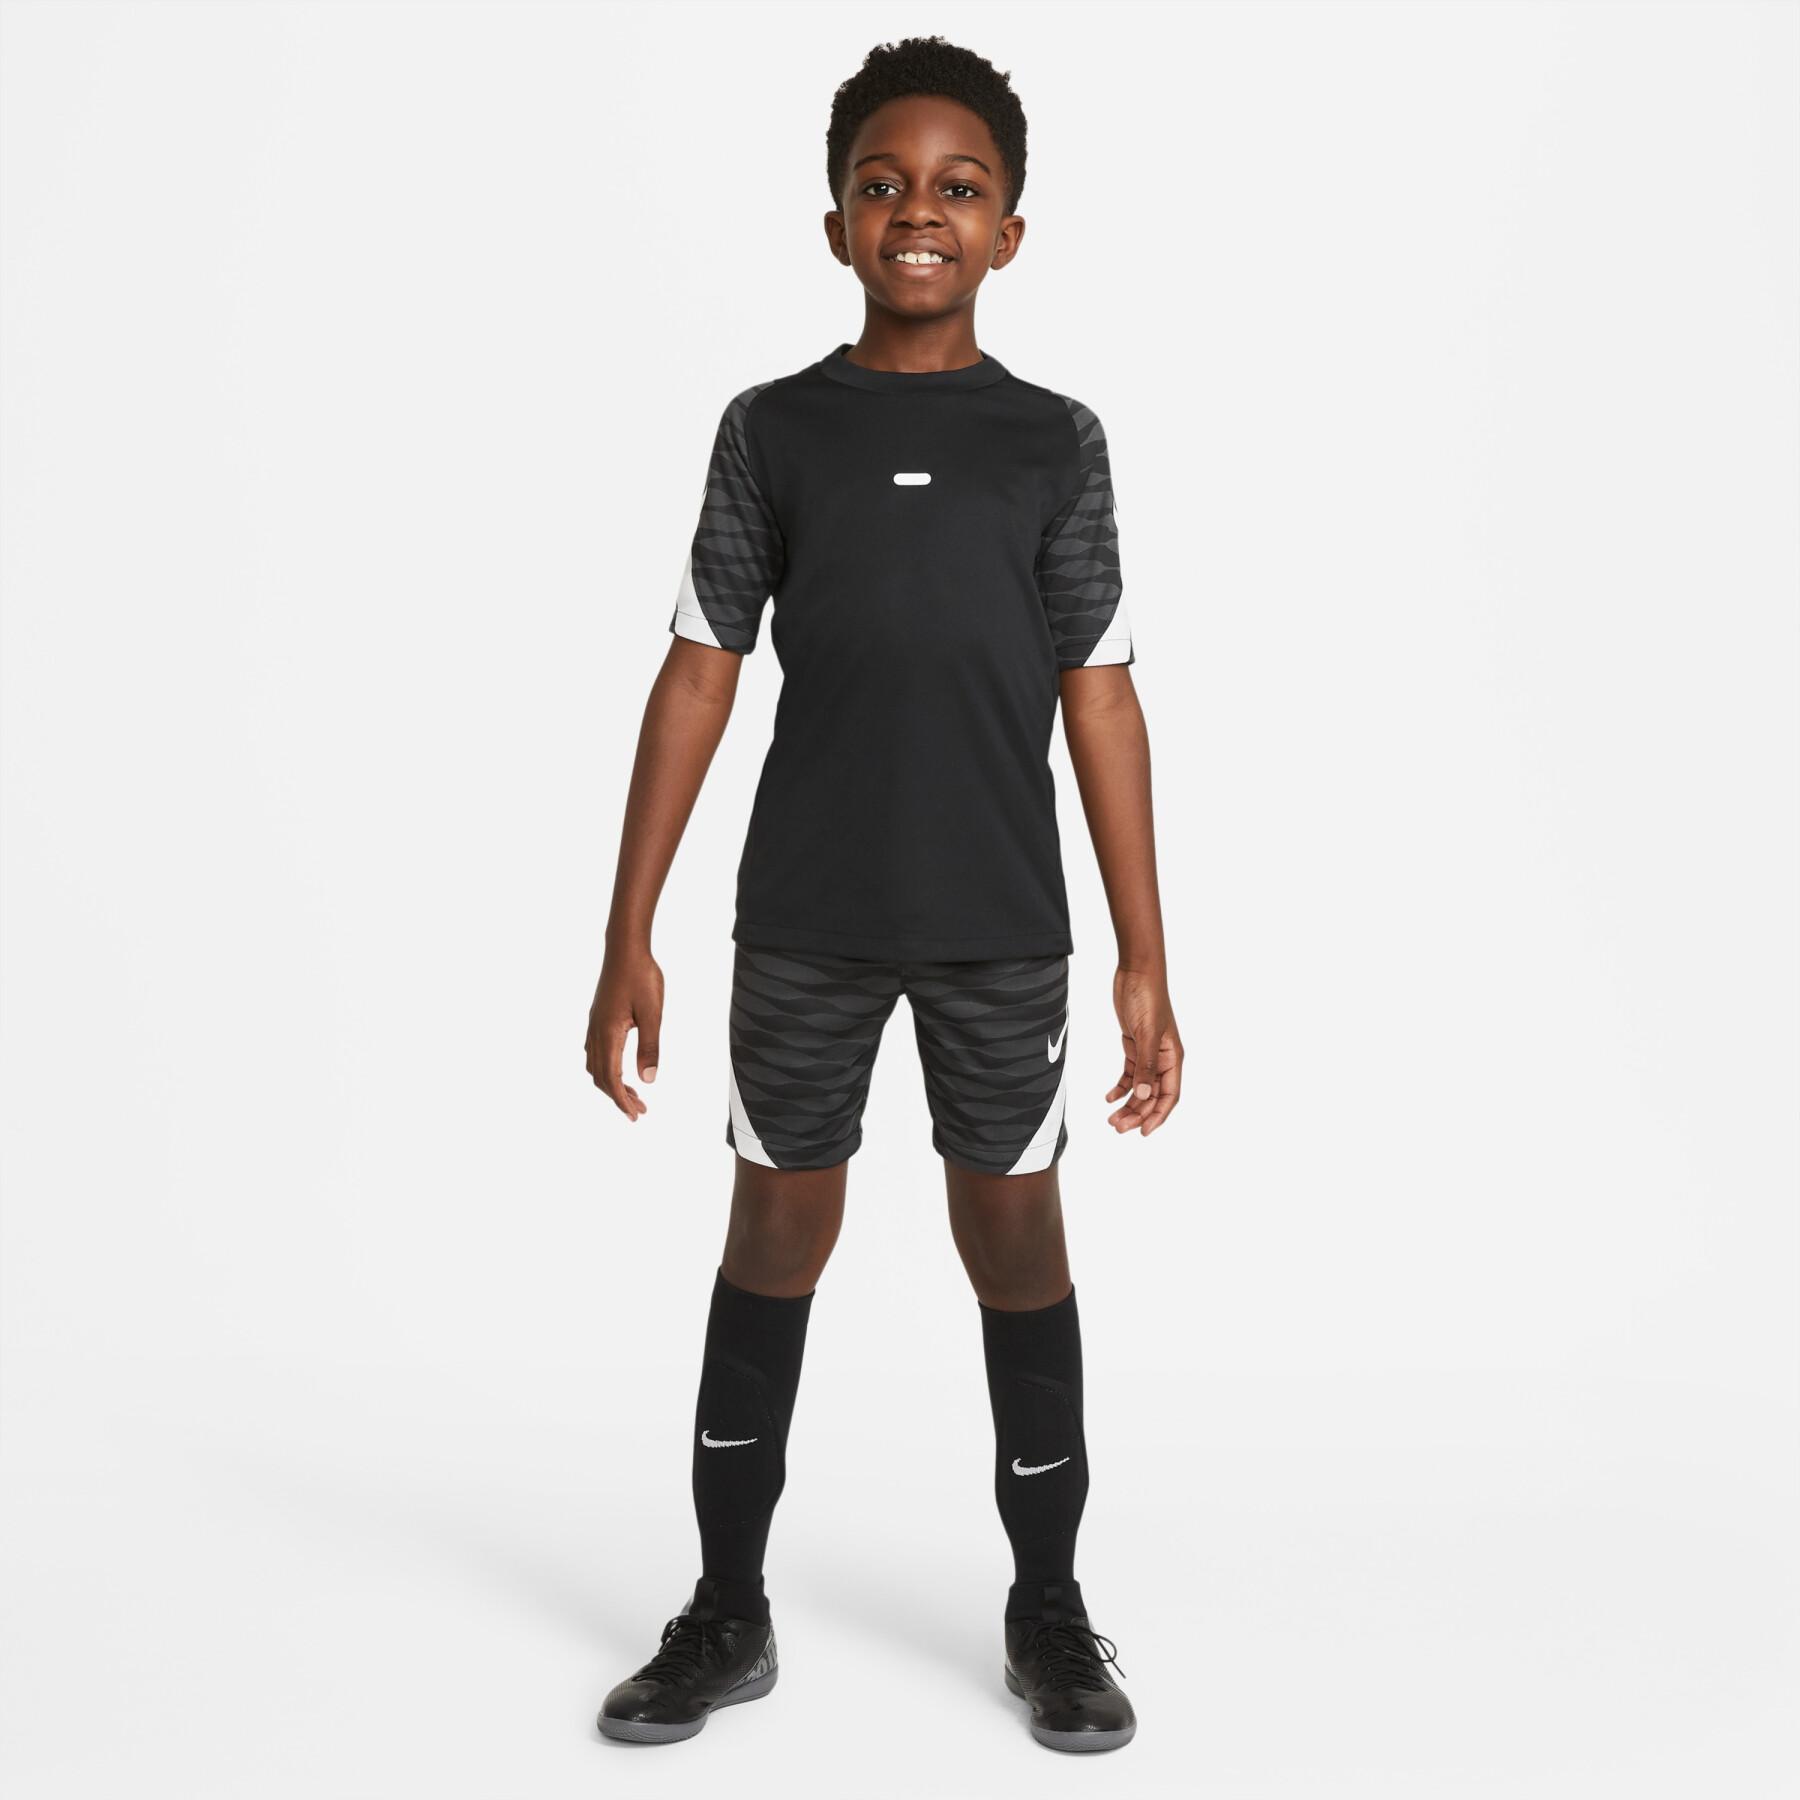 Children's shorts Nike Dynamic Fit StrikeE21